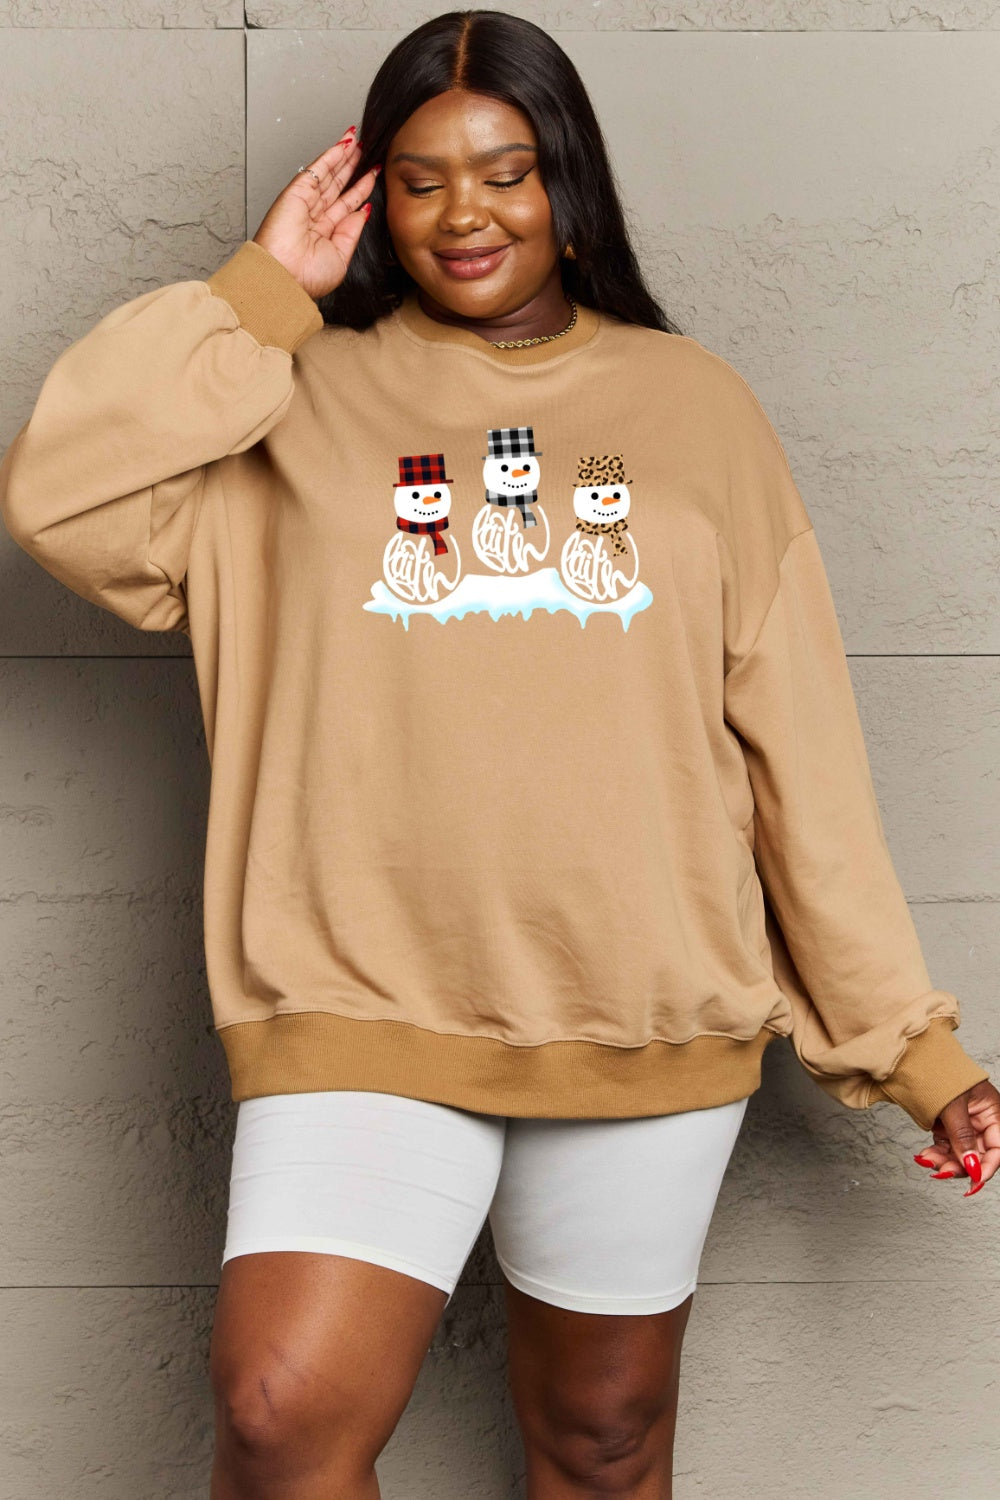 Simply Love Full Size Snowmen Graphic Sweatshirt